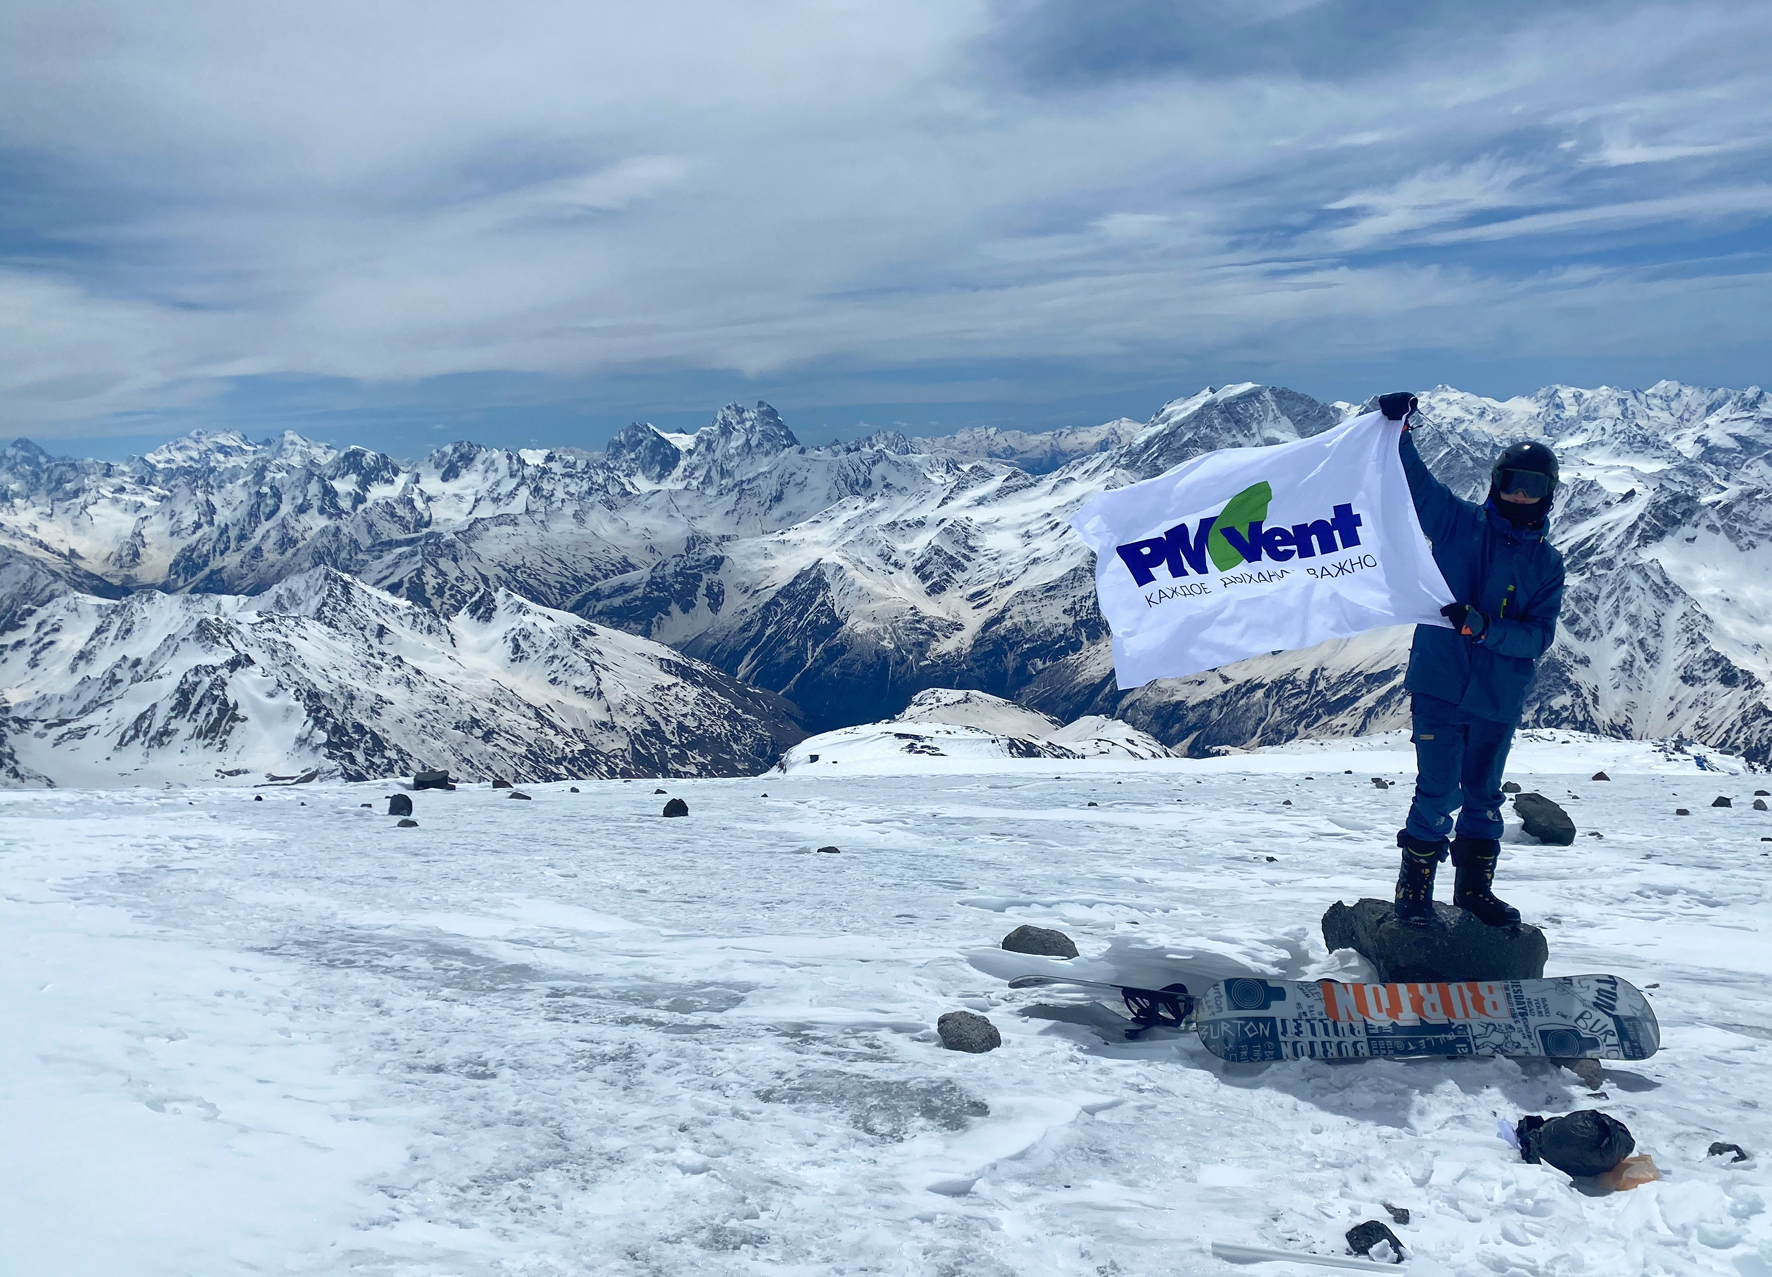 PM Vent on the Elbrus